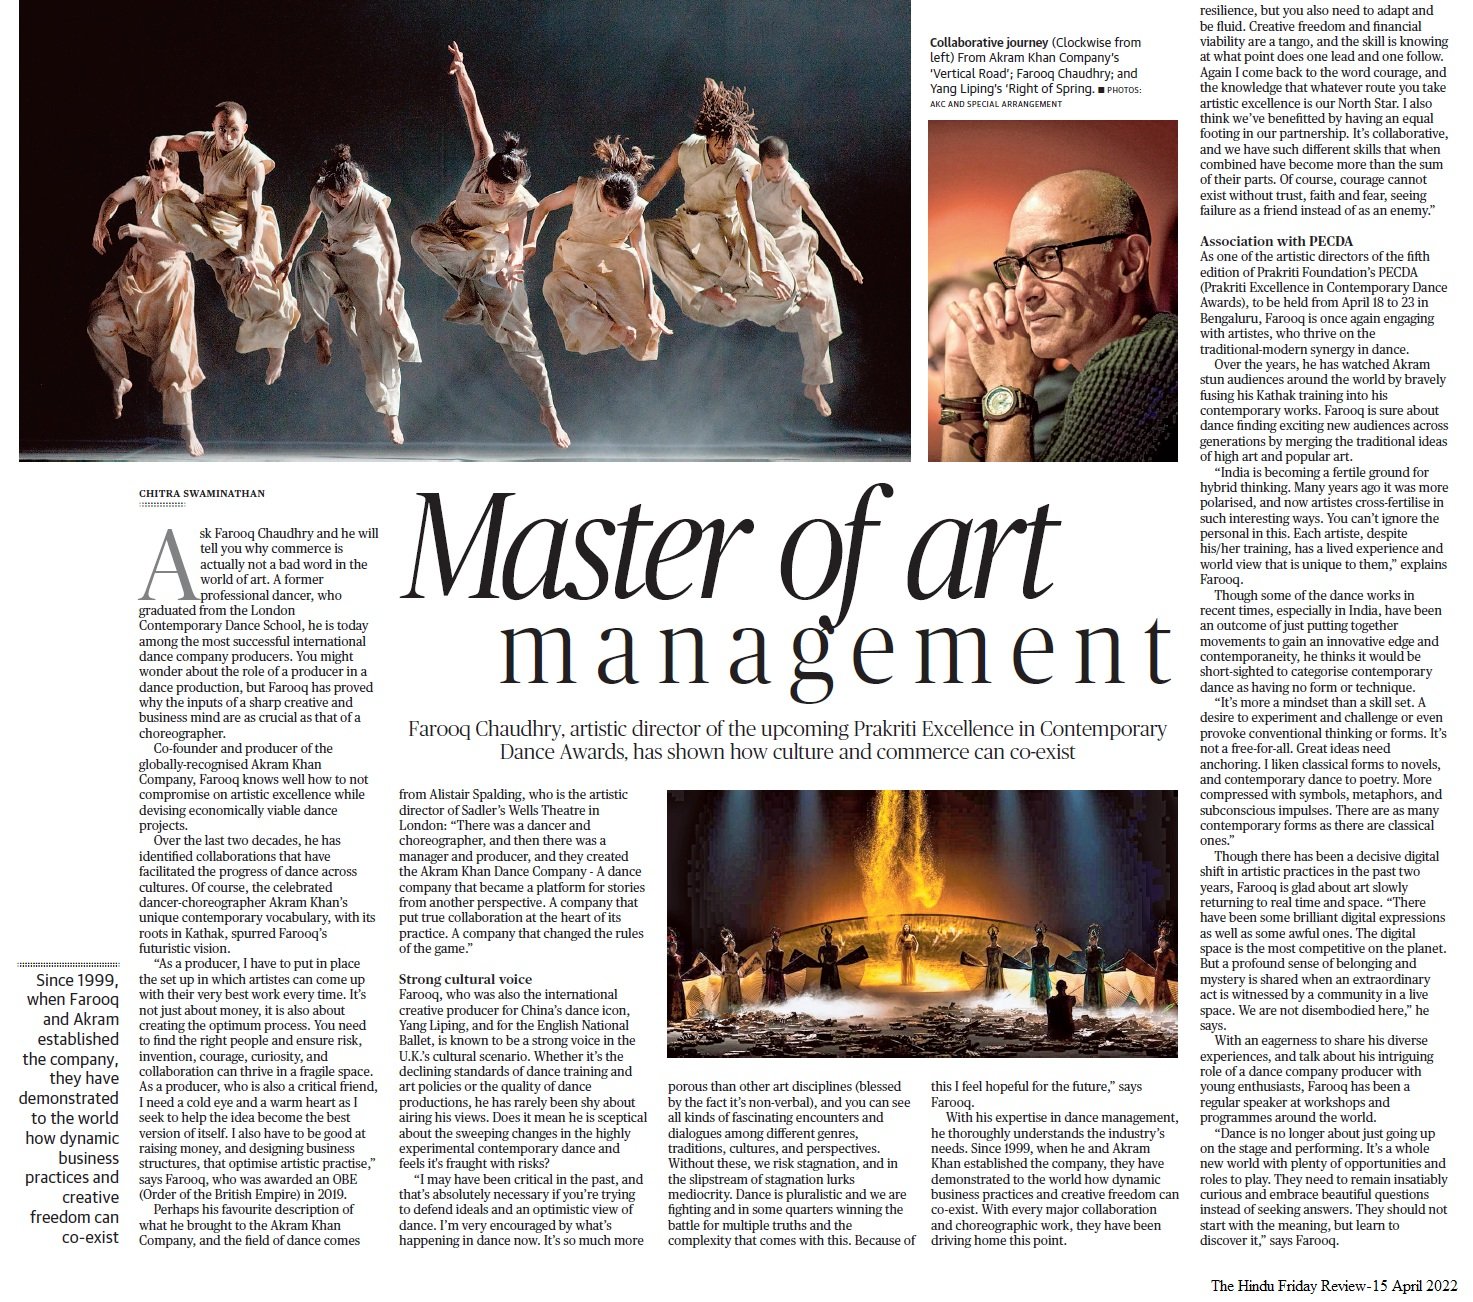 Master of art management - Chitra Swaminathan